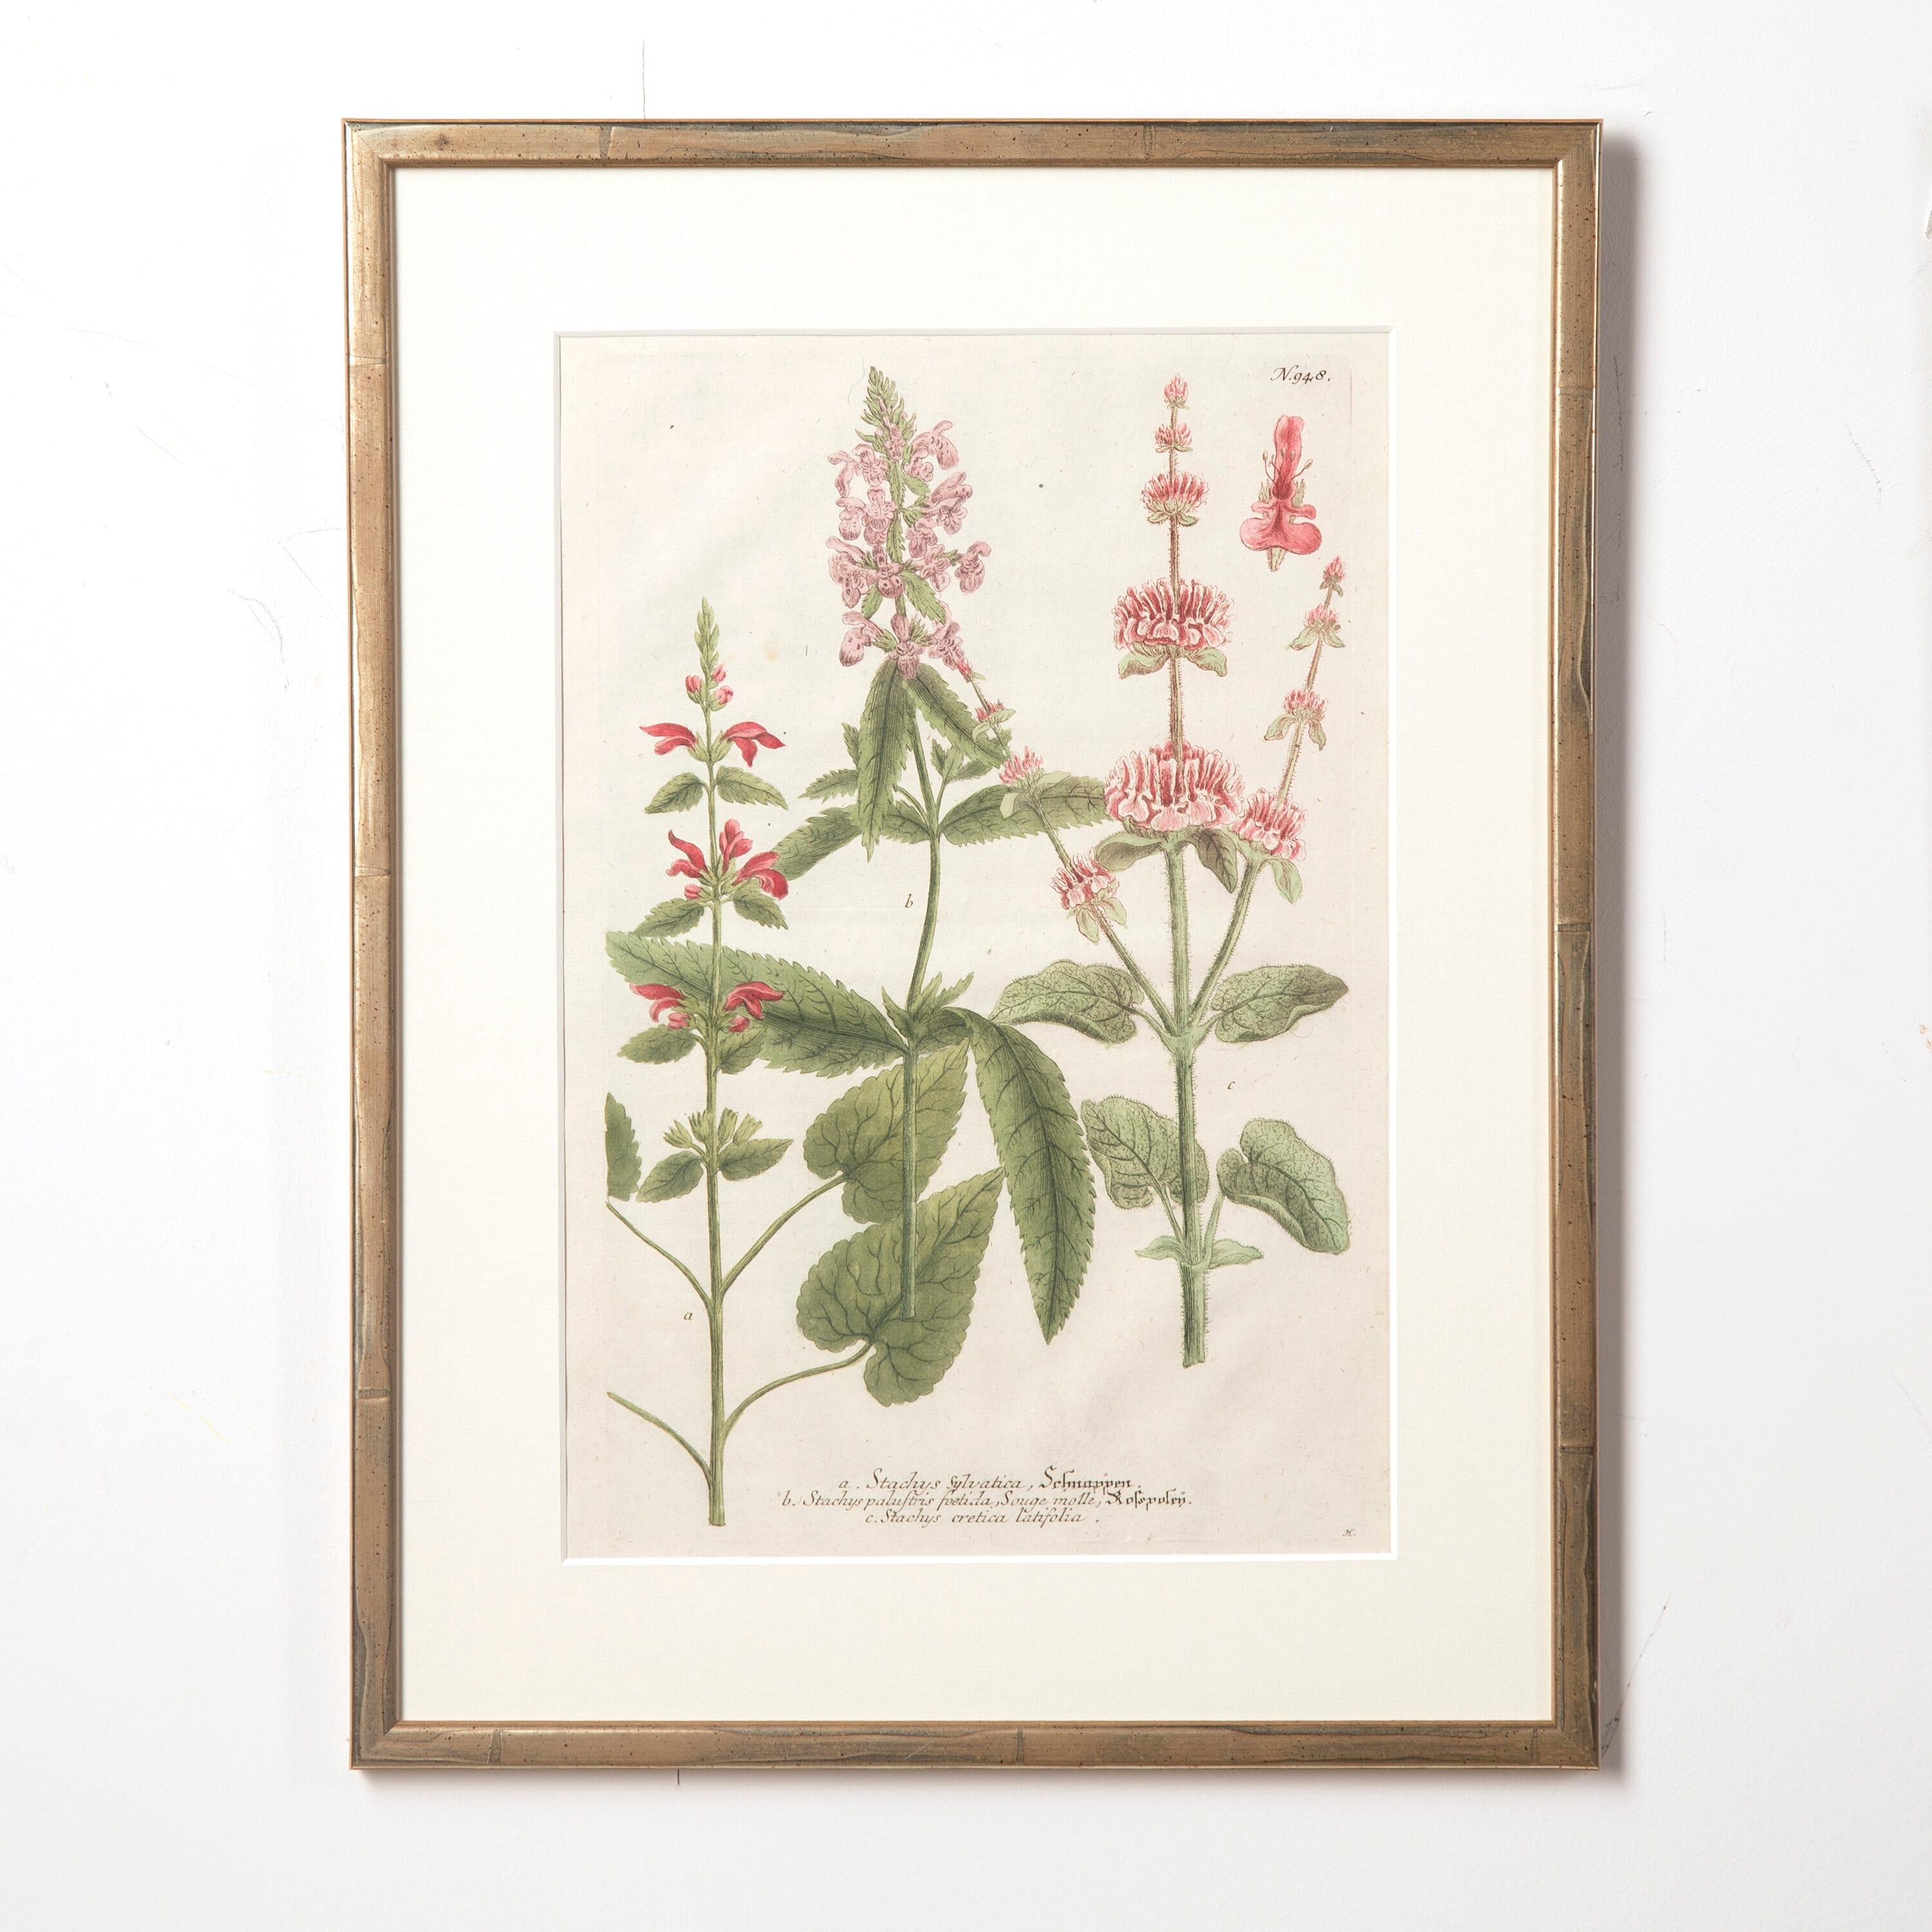 18th century botanical illustrations